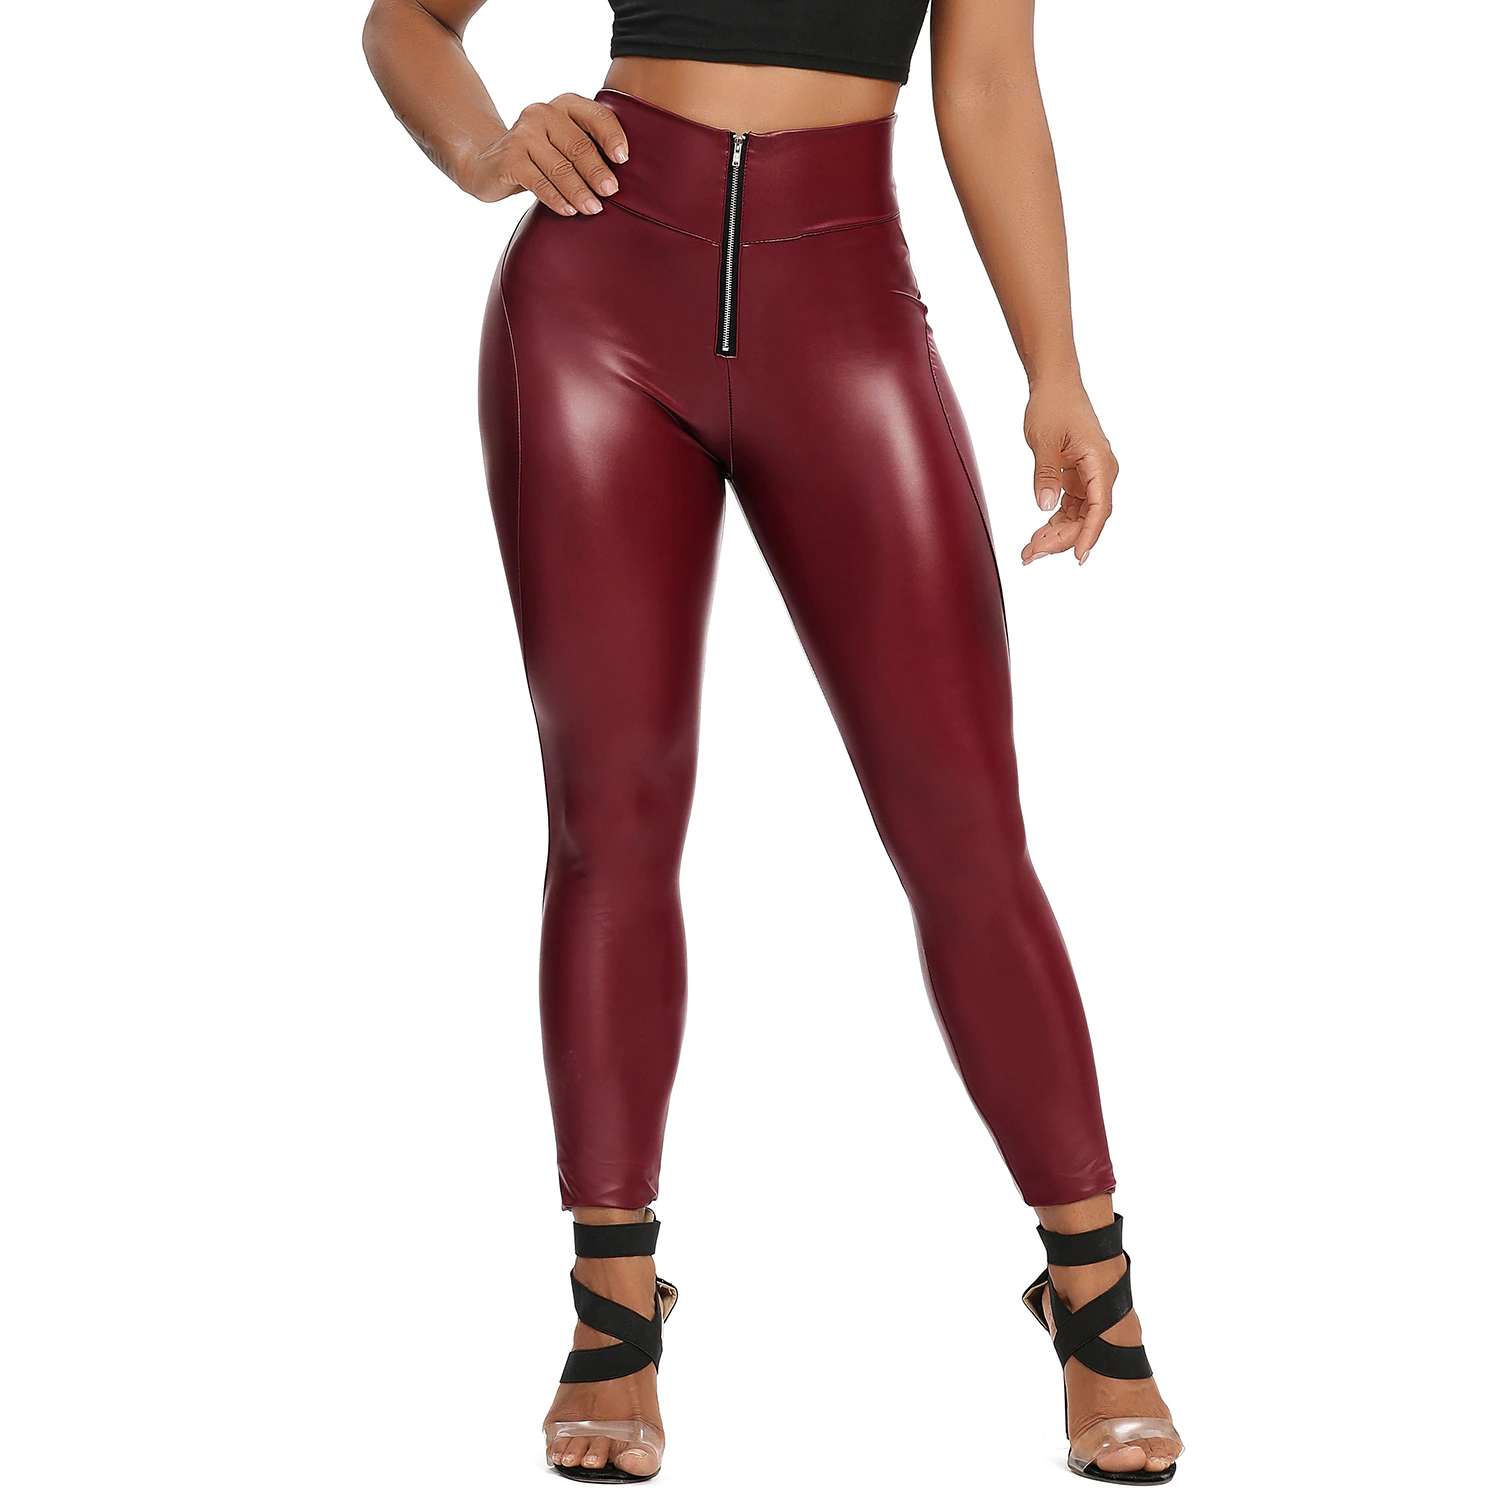 Leather Yoga Pants For Women - skyjackerz